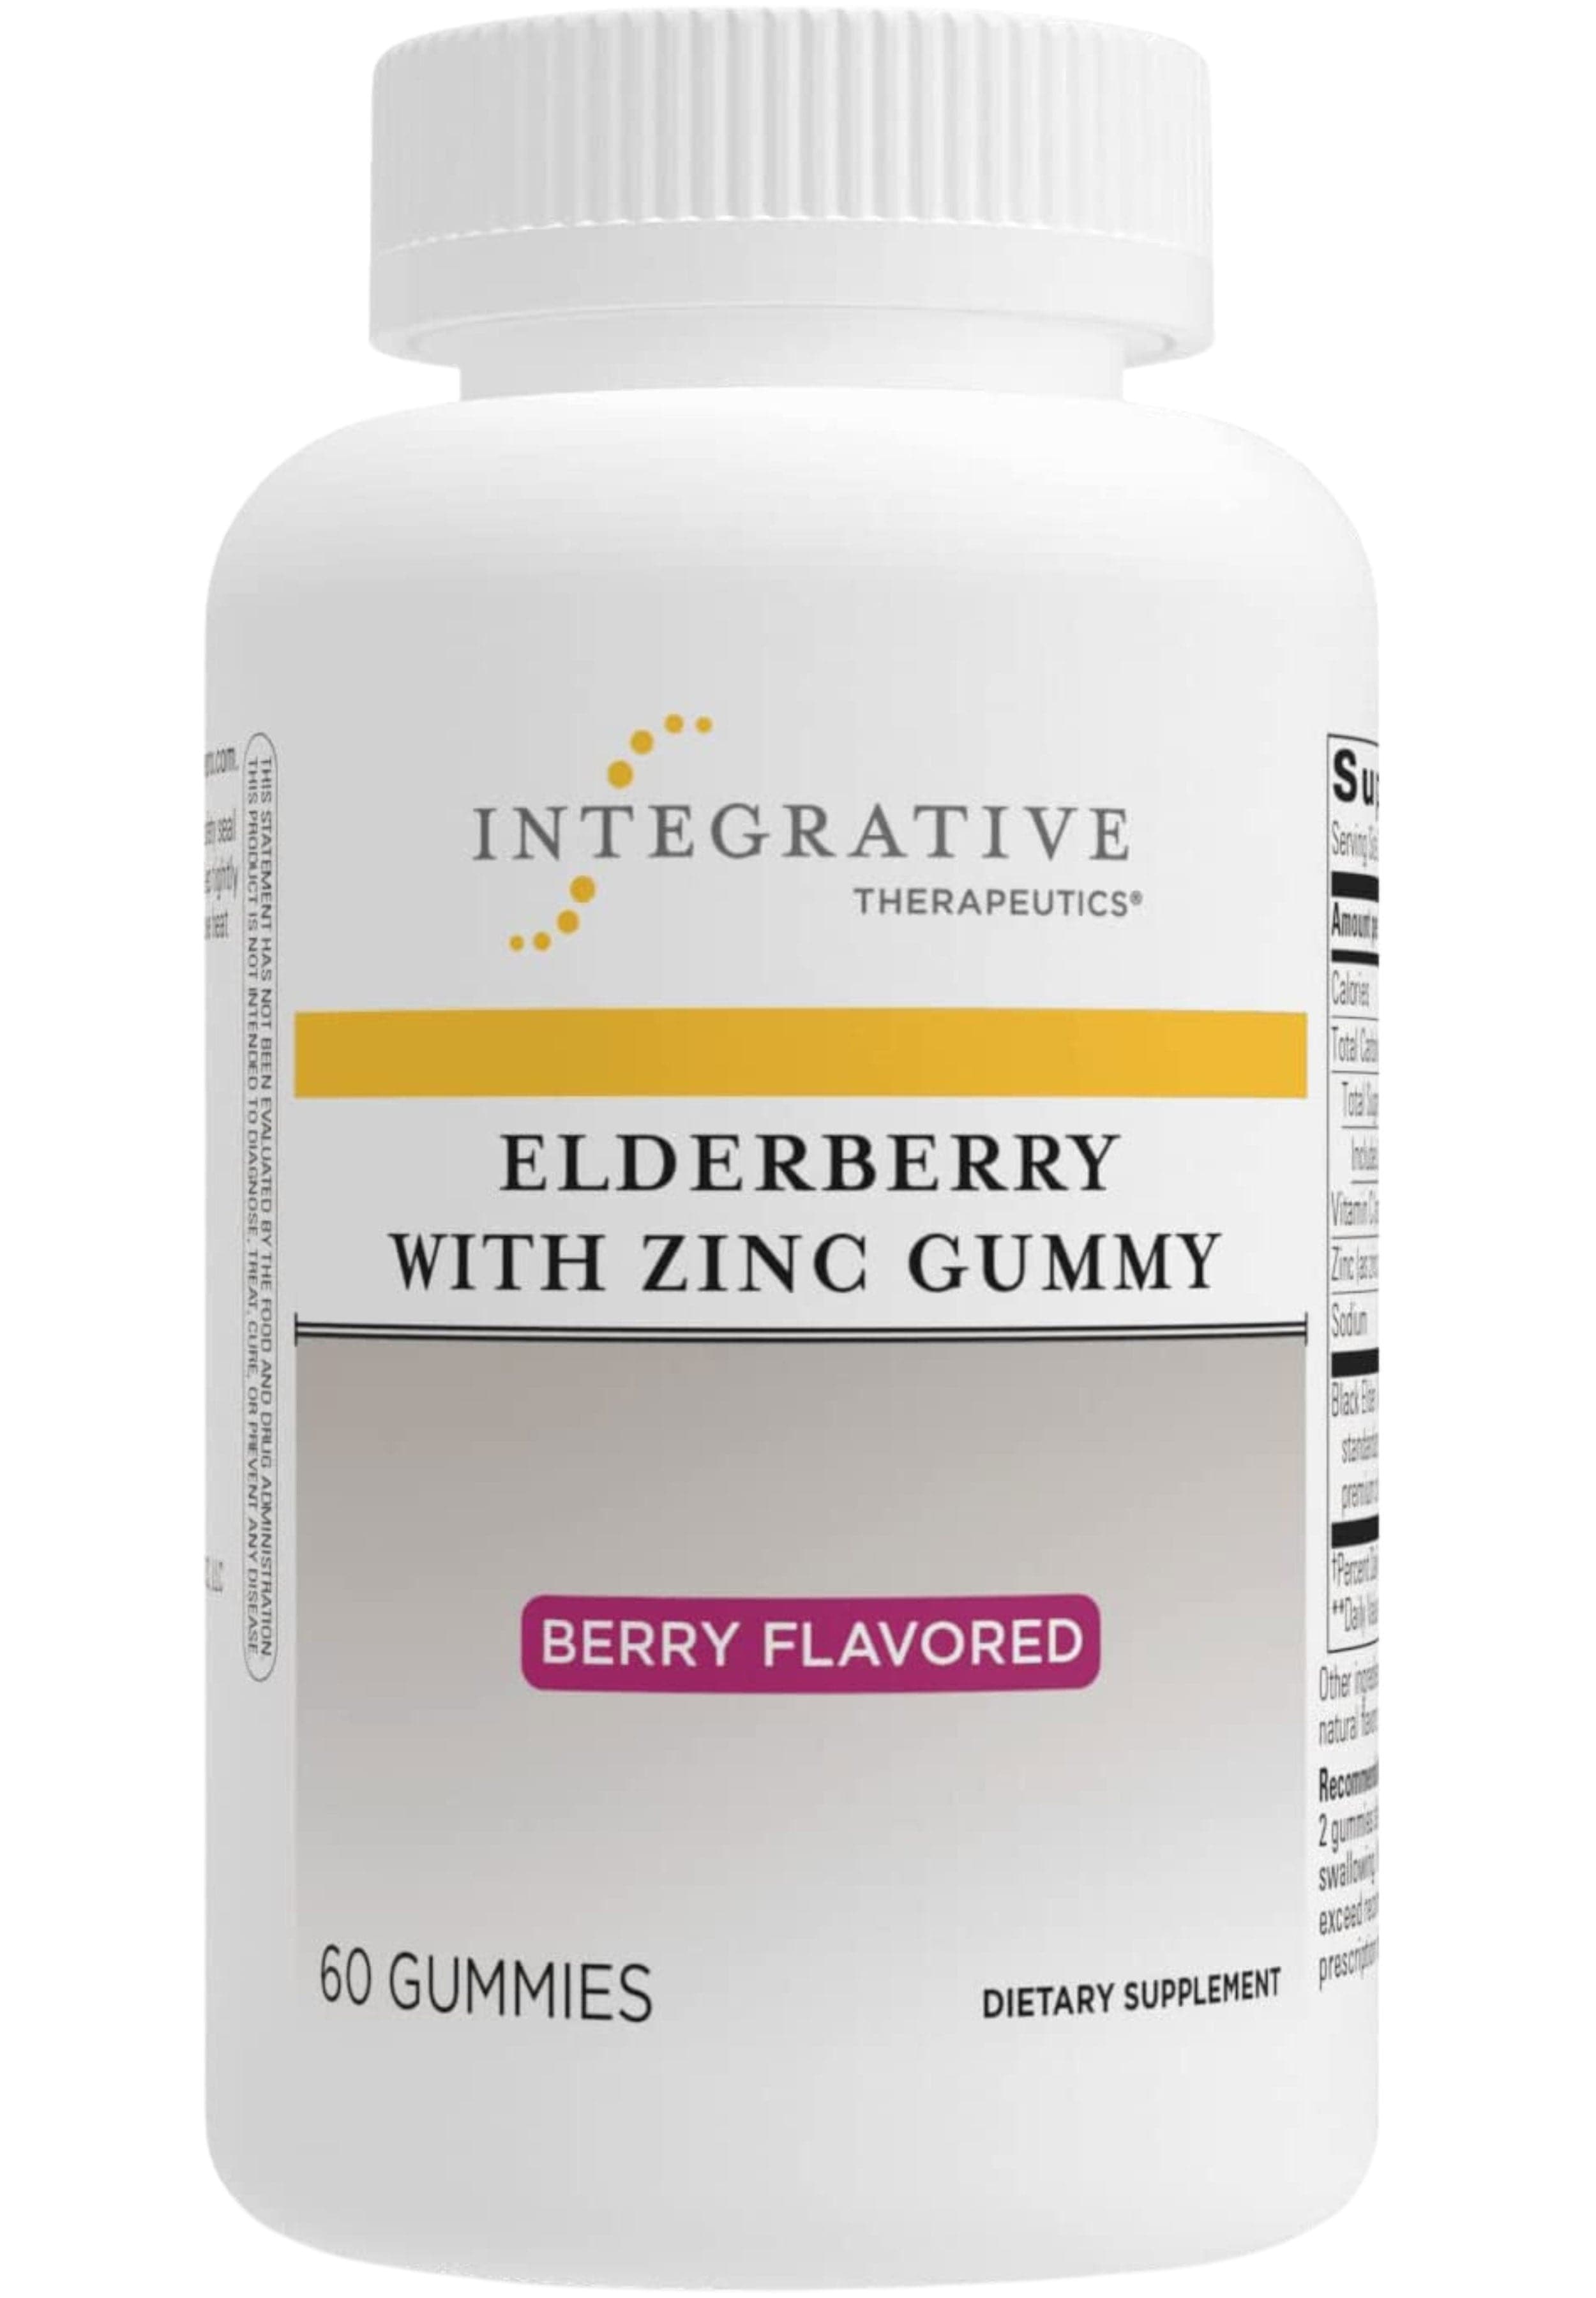 Integrative Therapeutics Elderberry with Zinc Gummy